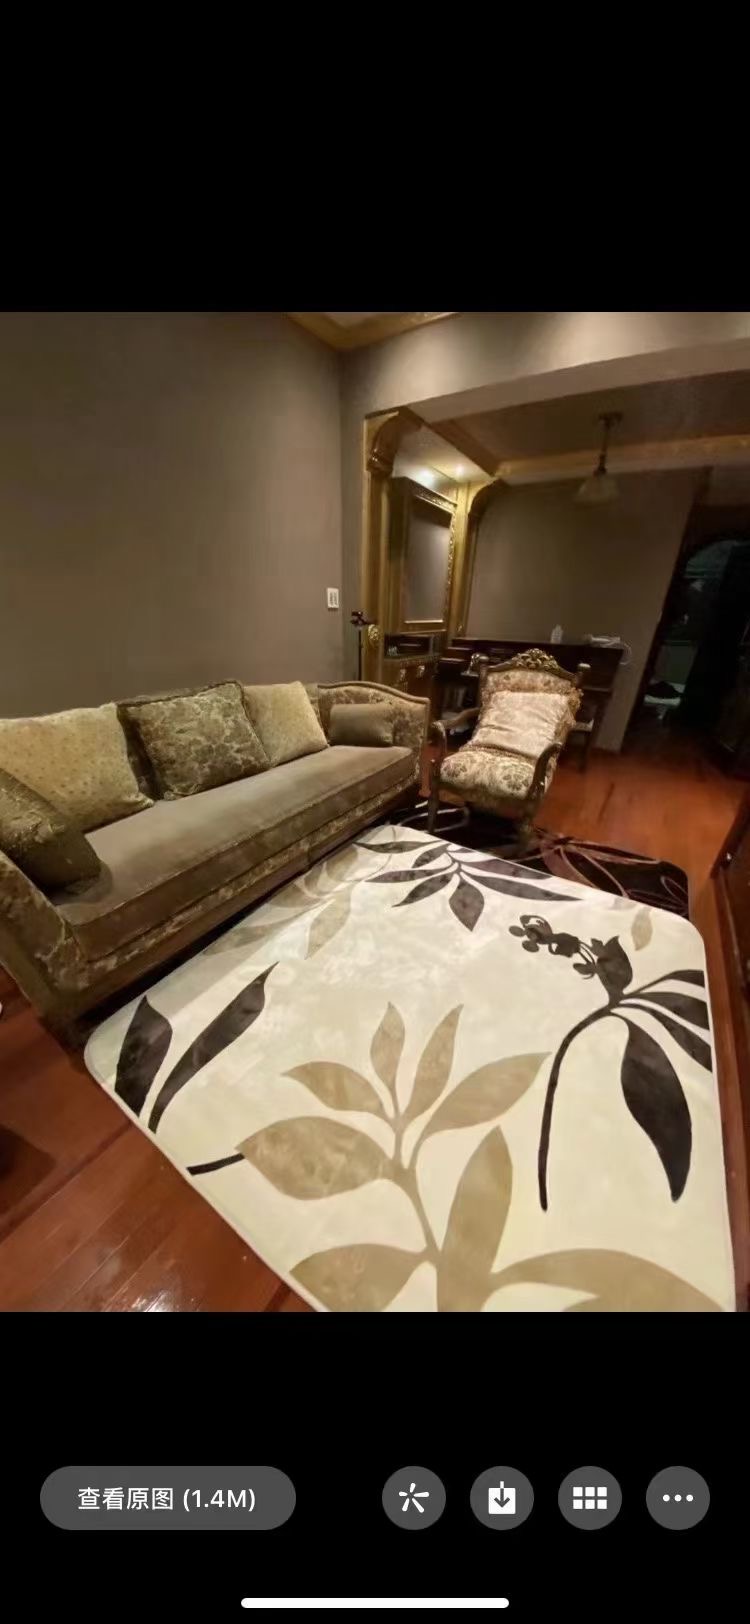 43633 - Skid resistant carpet China